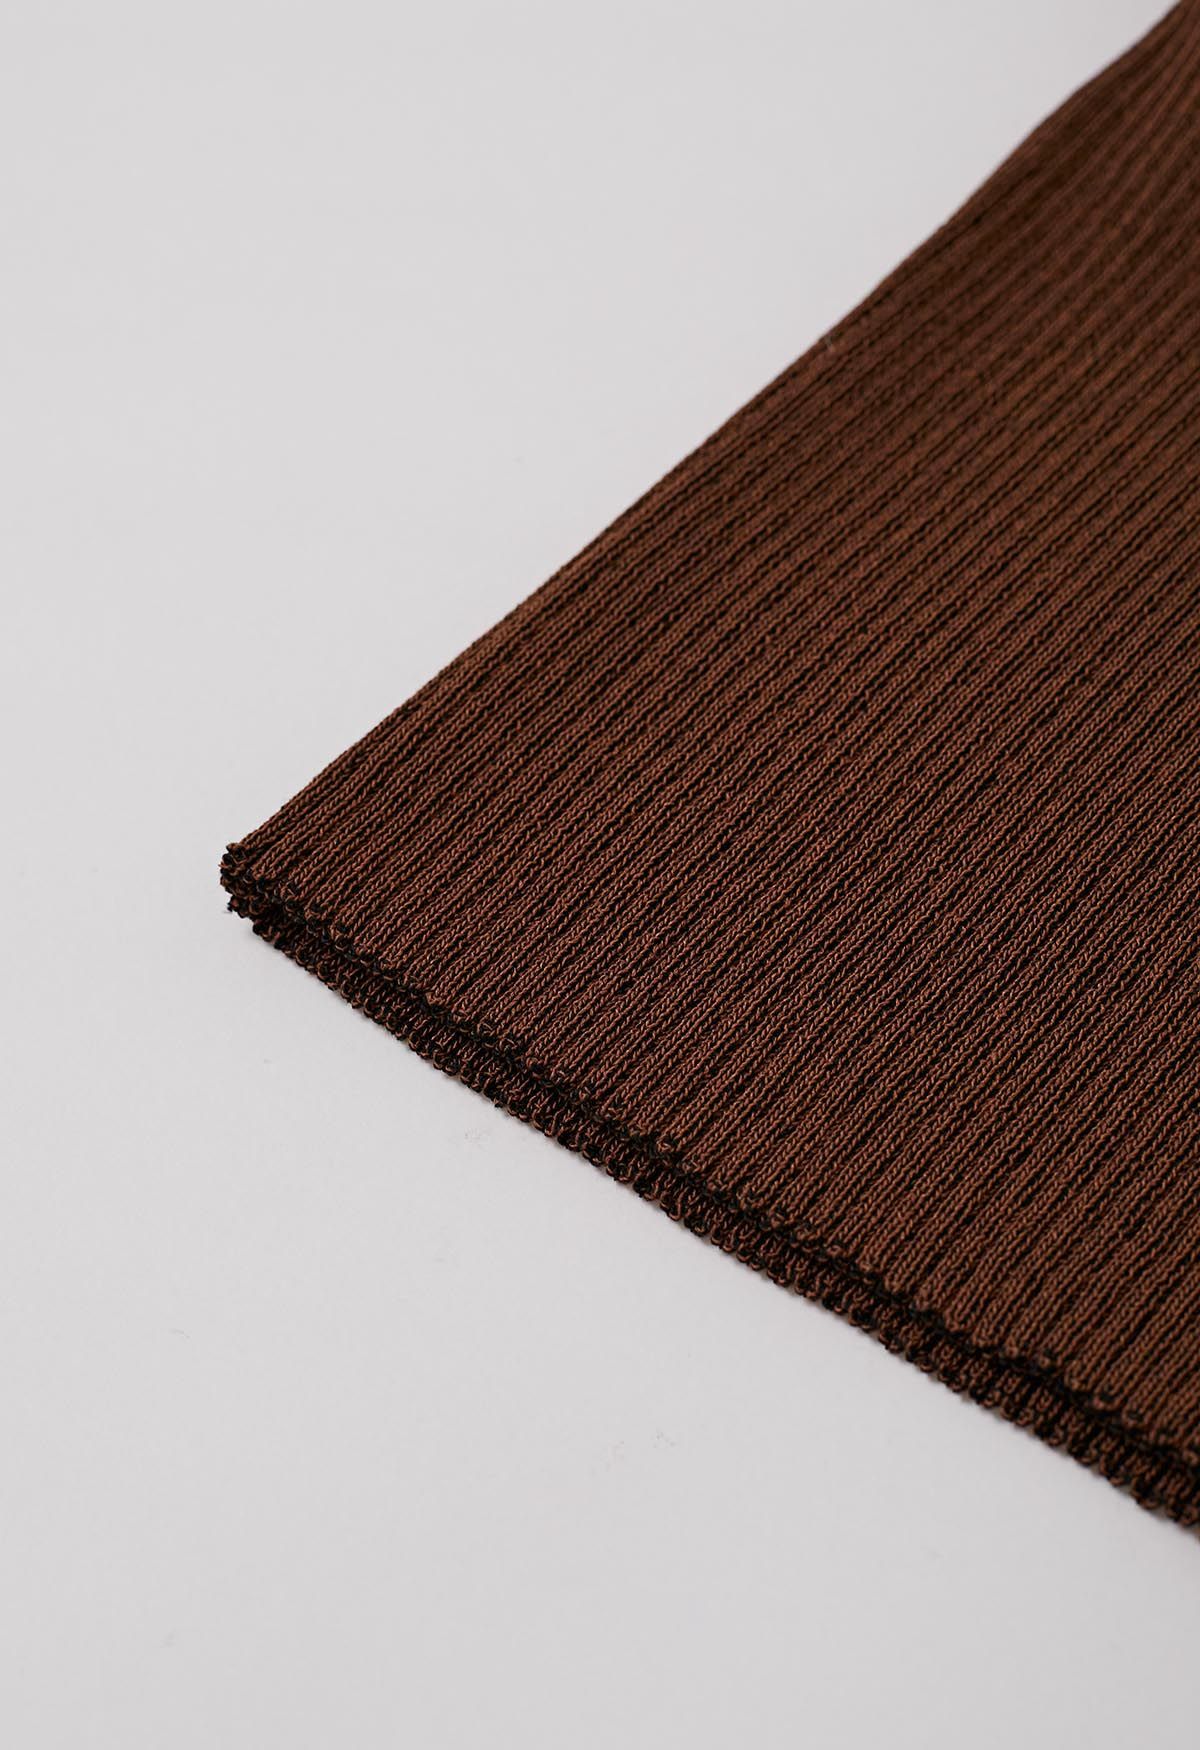 Top sin mangas de punto con textura de rayas en marrón